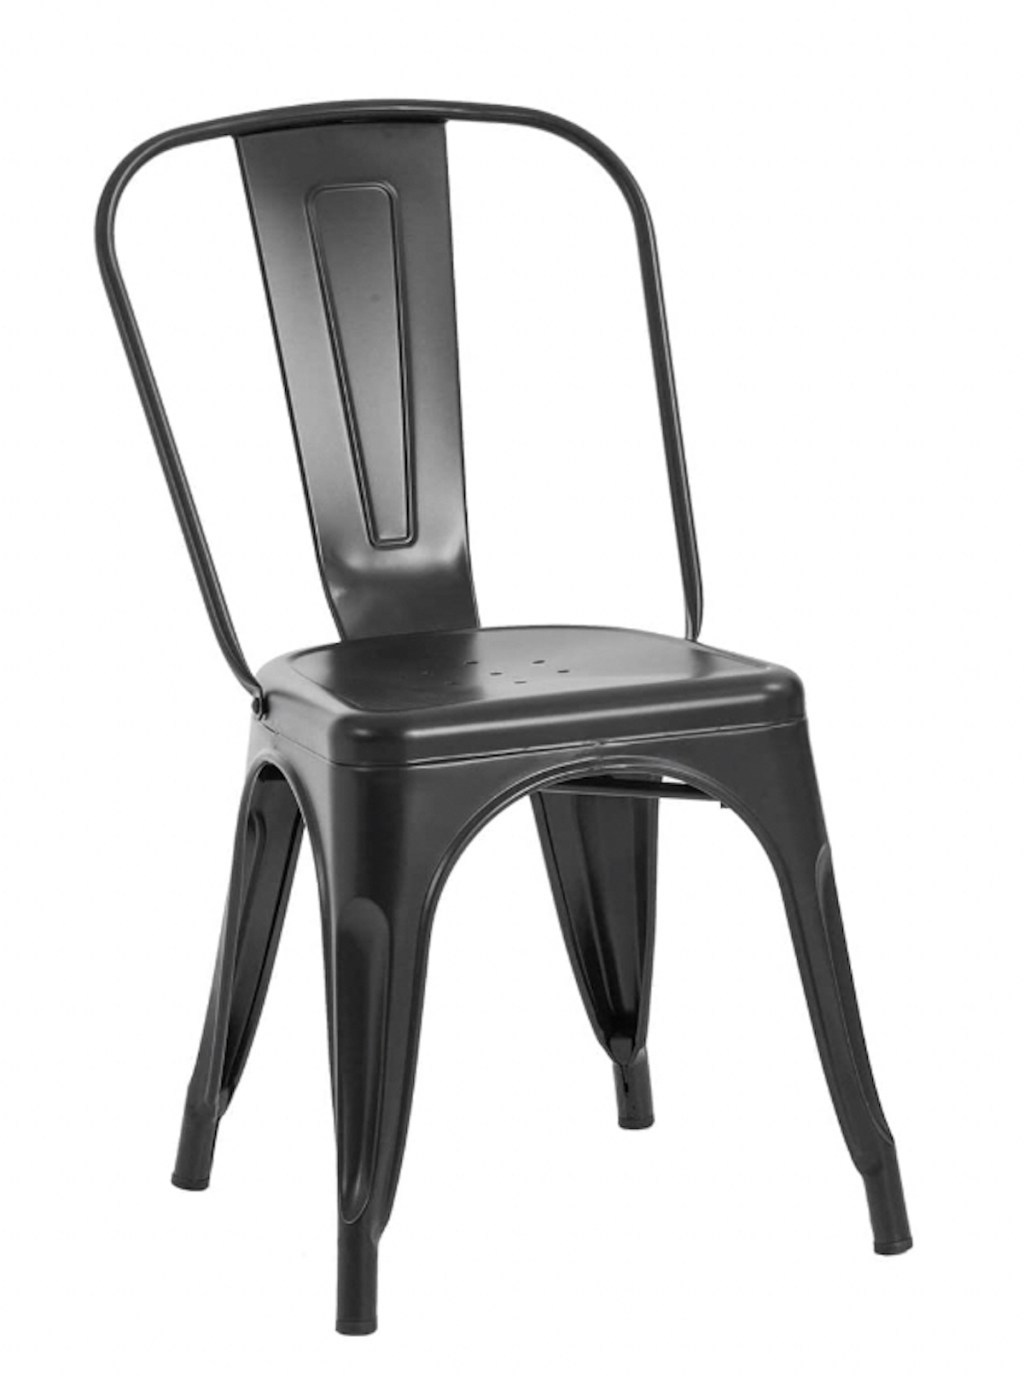 stock photo of black metal chair 